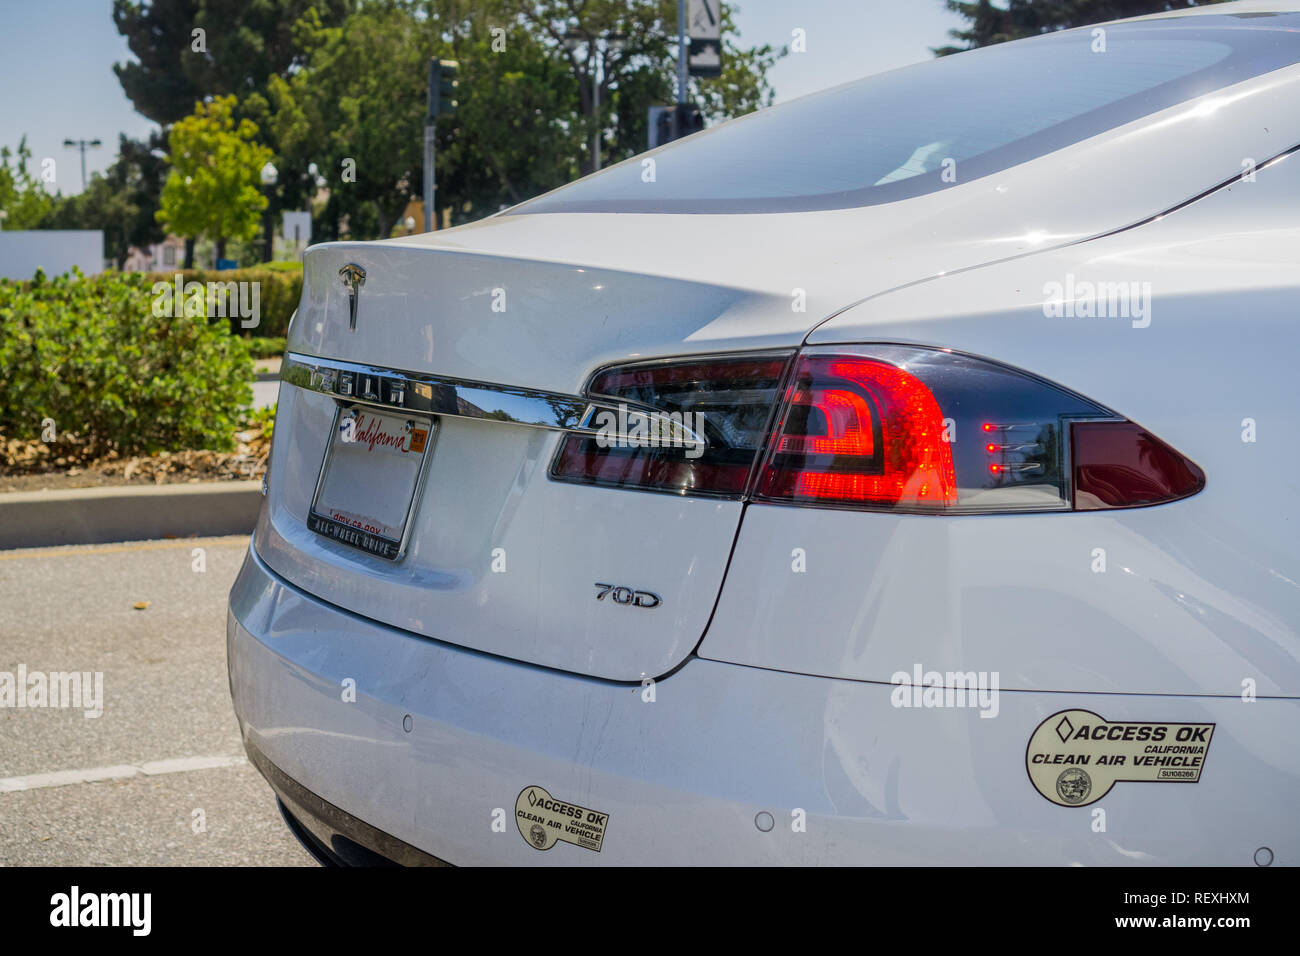 August 30, 2017 Sunnyvale/CA/USA - Tesla Model S 70D rear light detail. Carpool lane Access OK clean air vehicle California decal Stock Photo